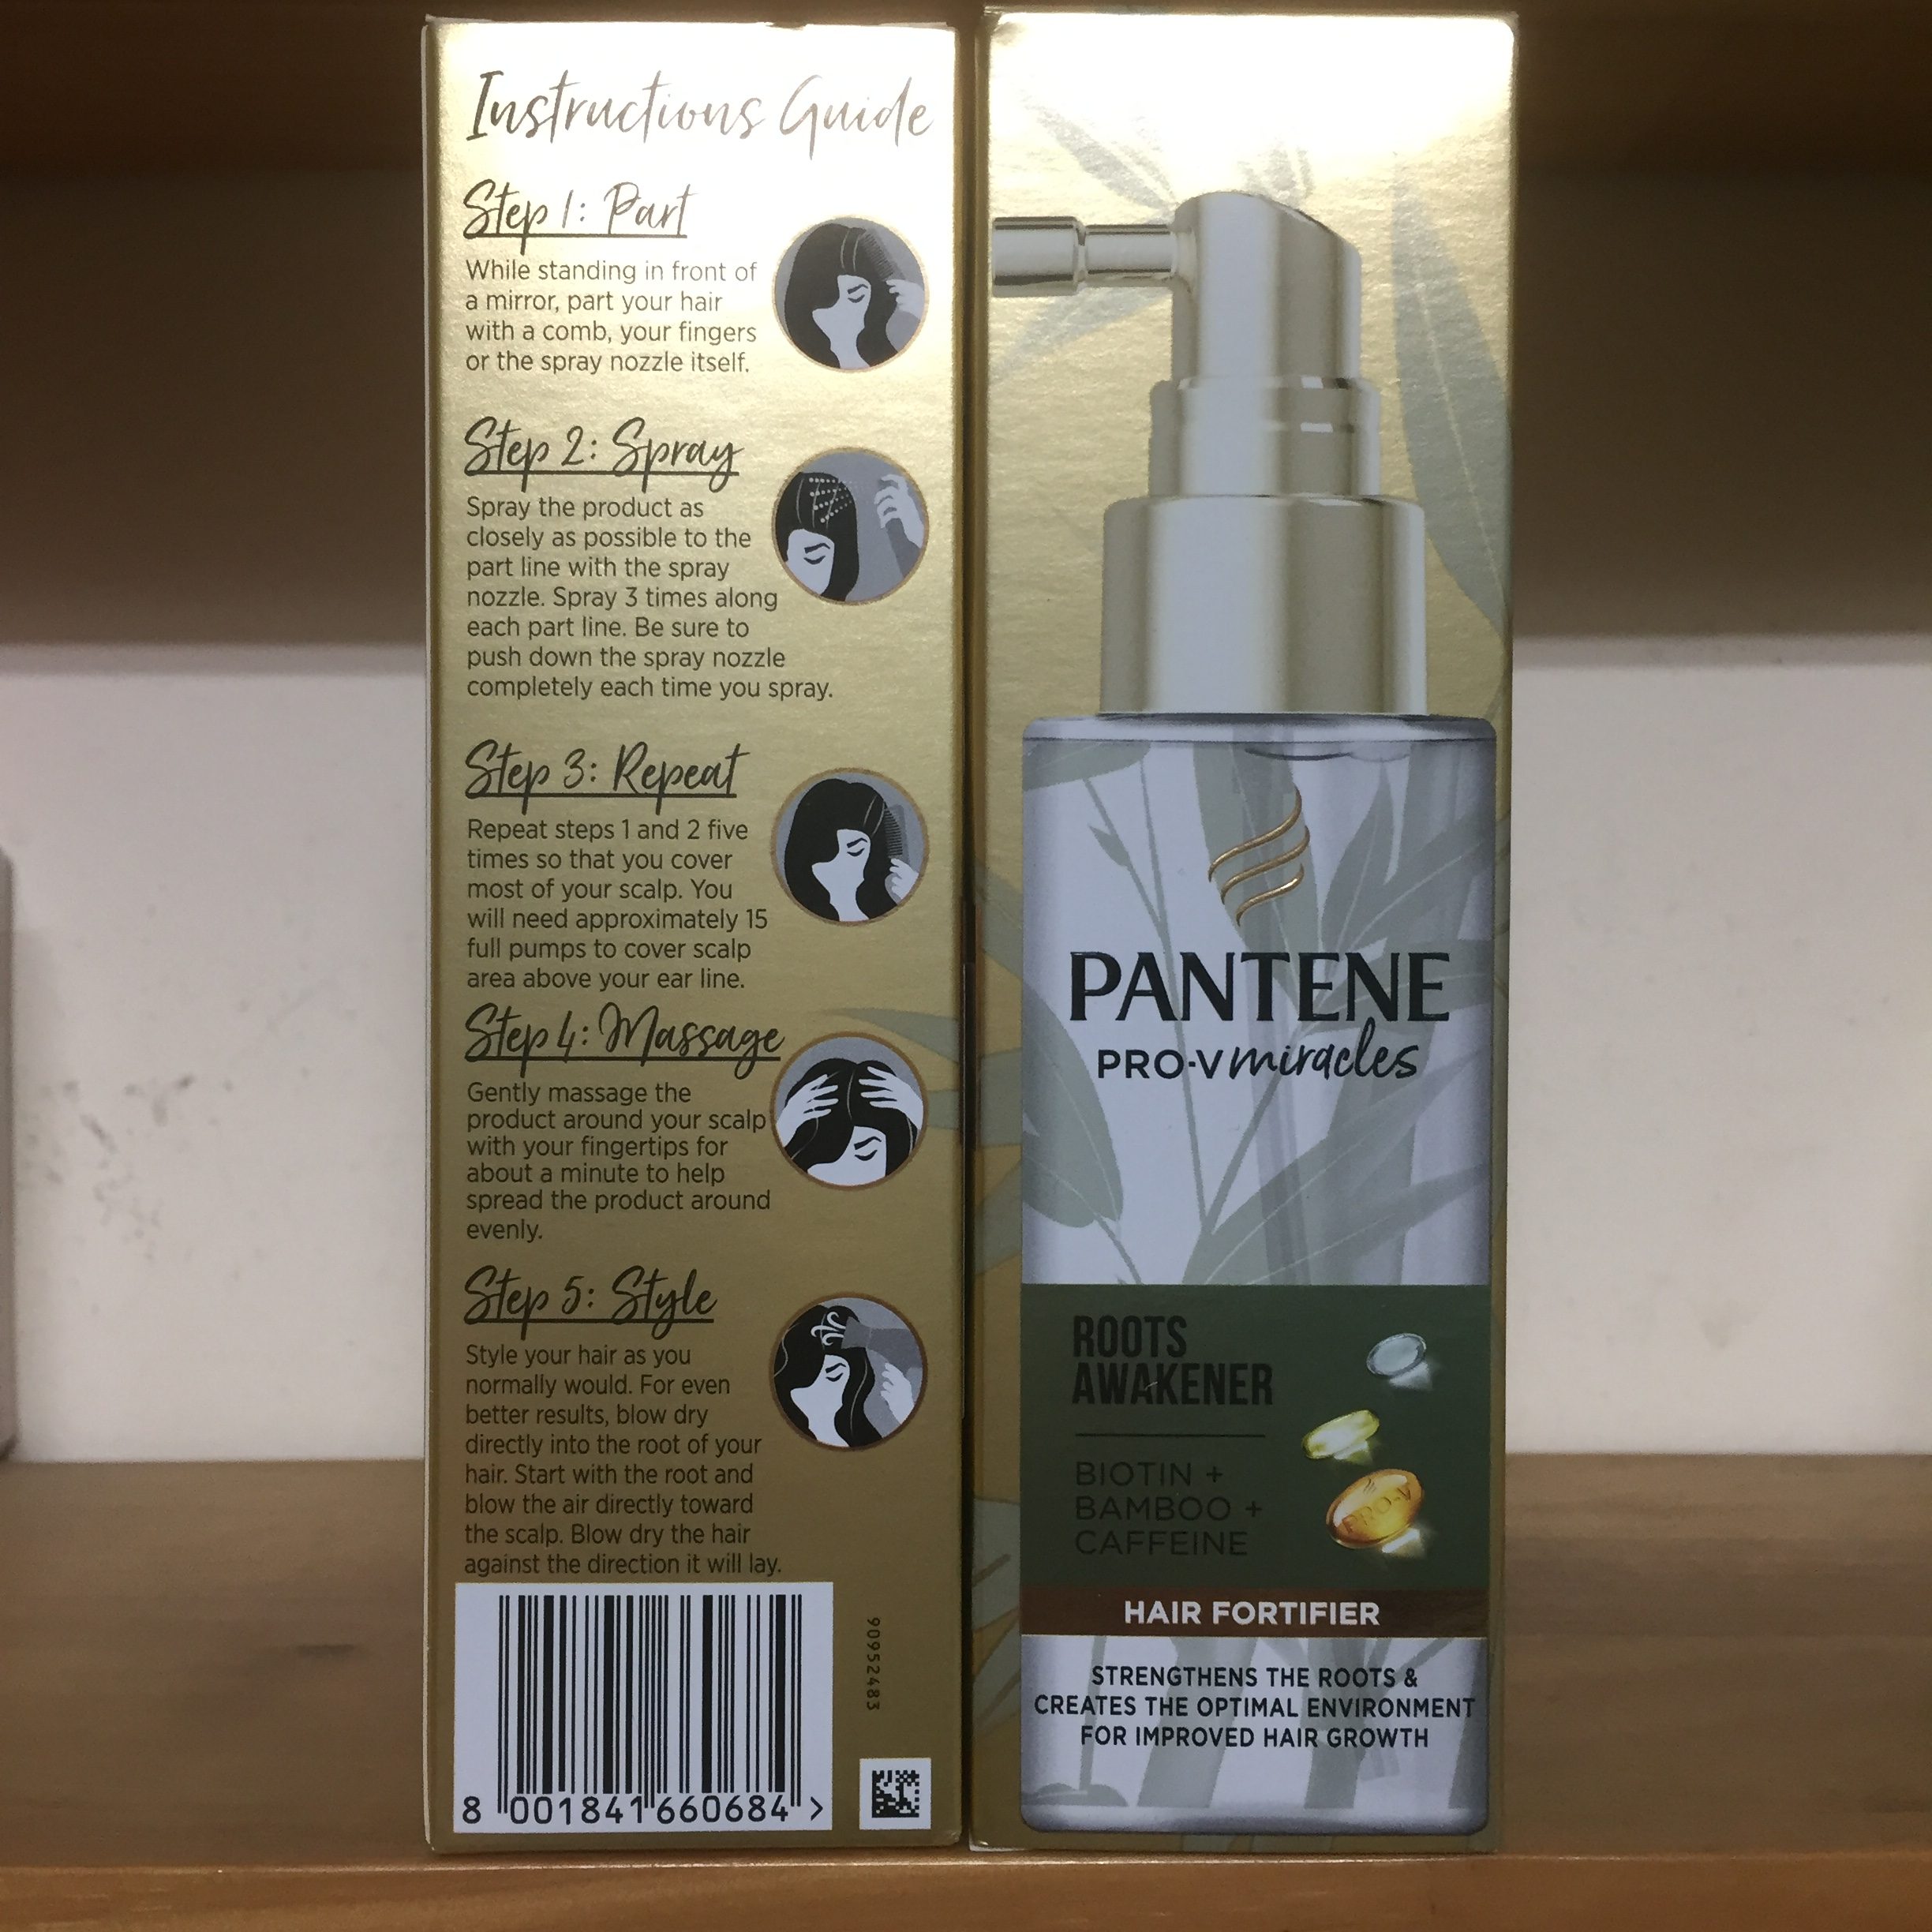 Pantene Grow Strong Roots Awakener Hair - Nhà thuốc Ba Con Mèo